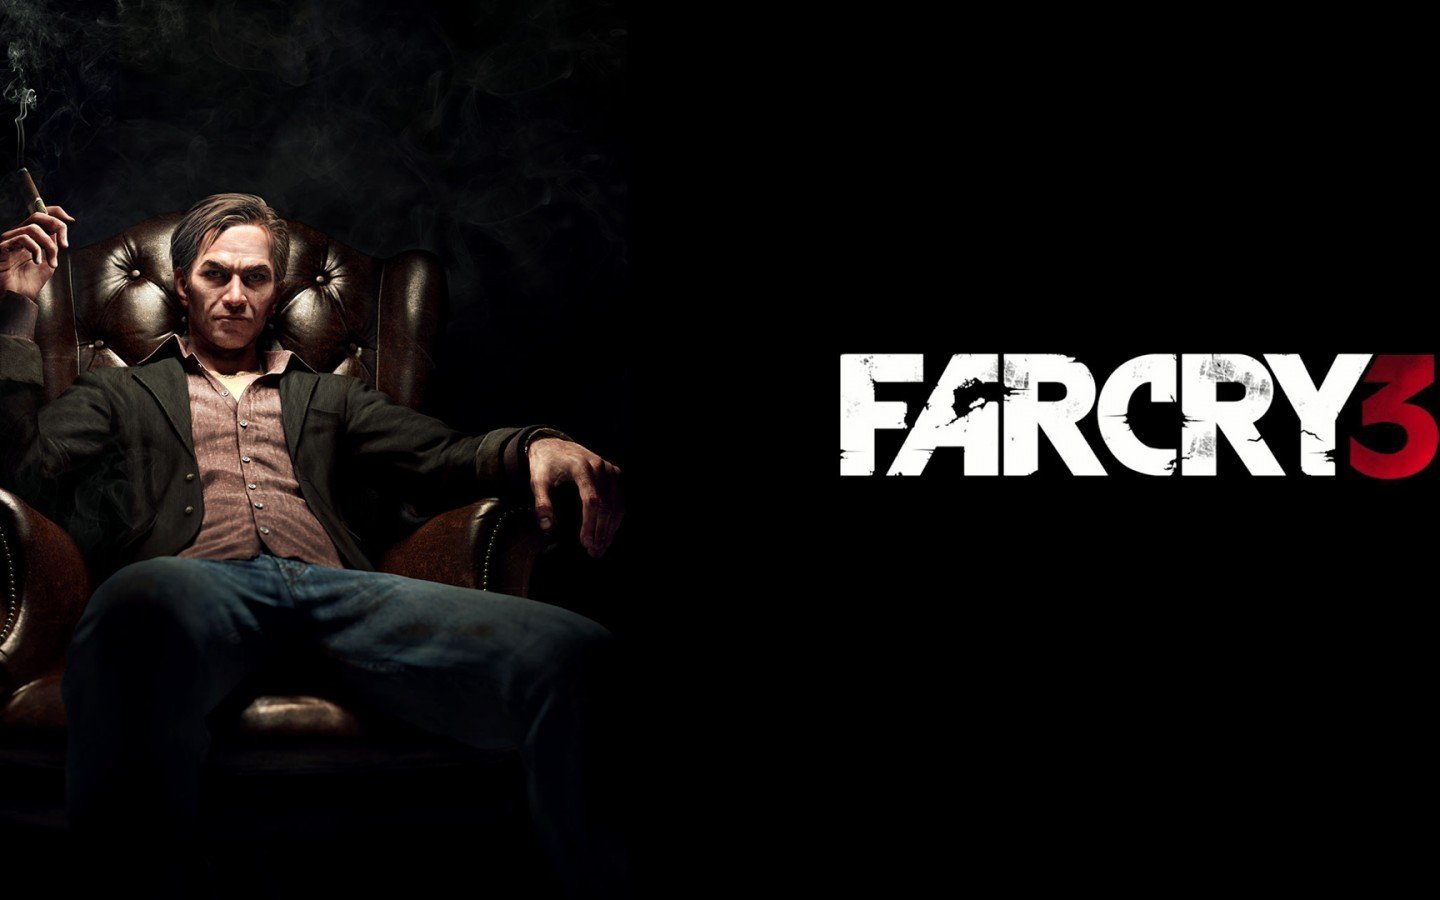 Hoyt Volker, Far Cry 3, Far Cry, Black background Wallpaper